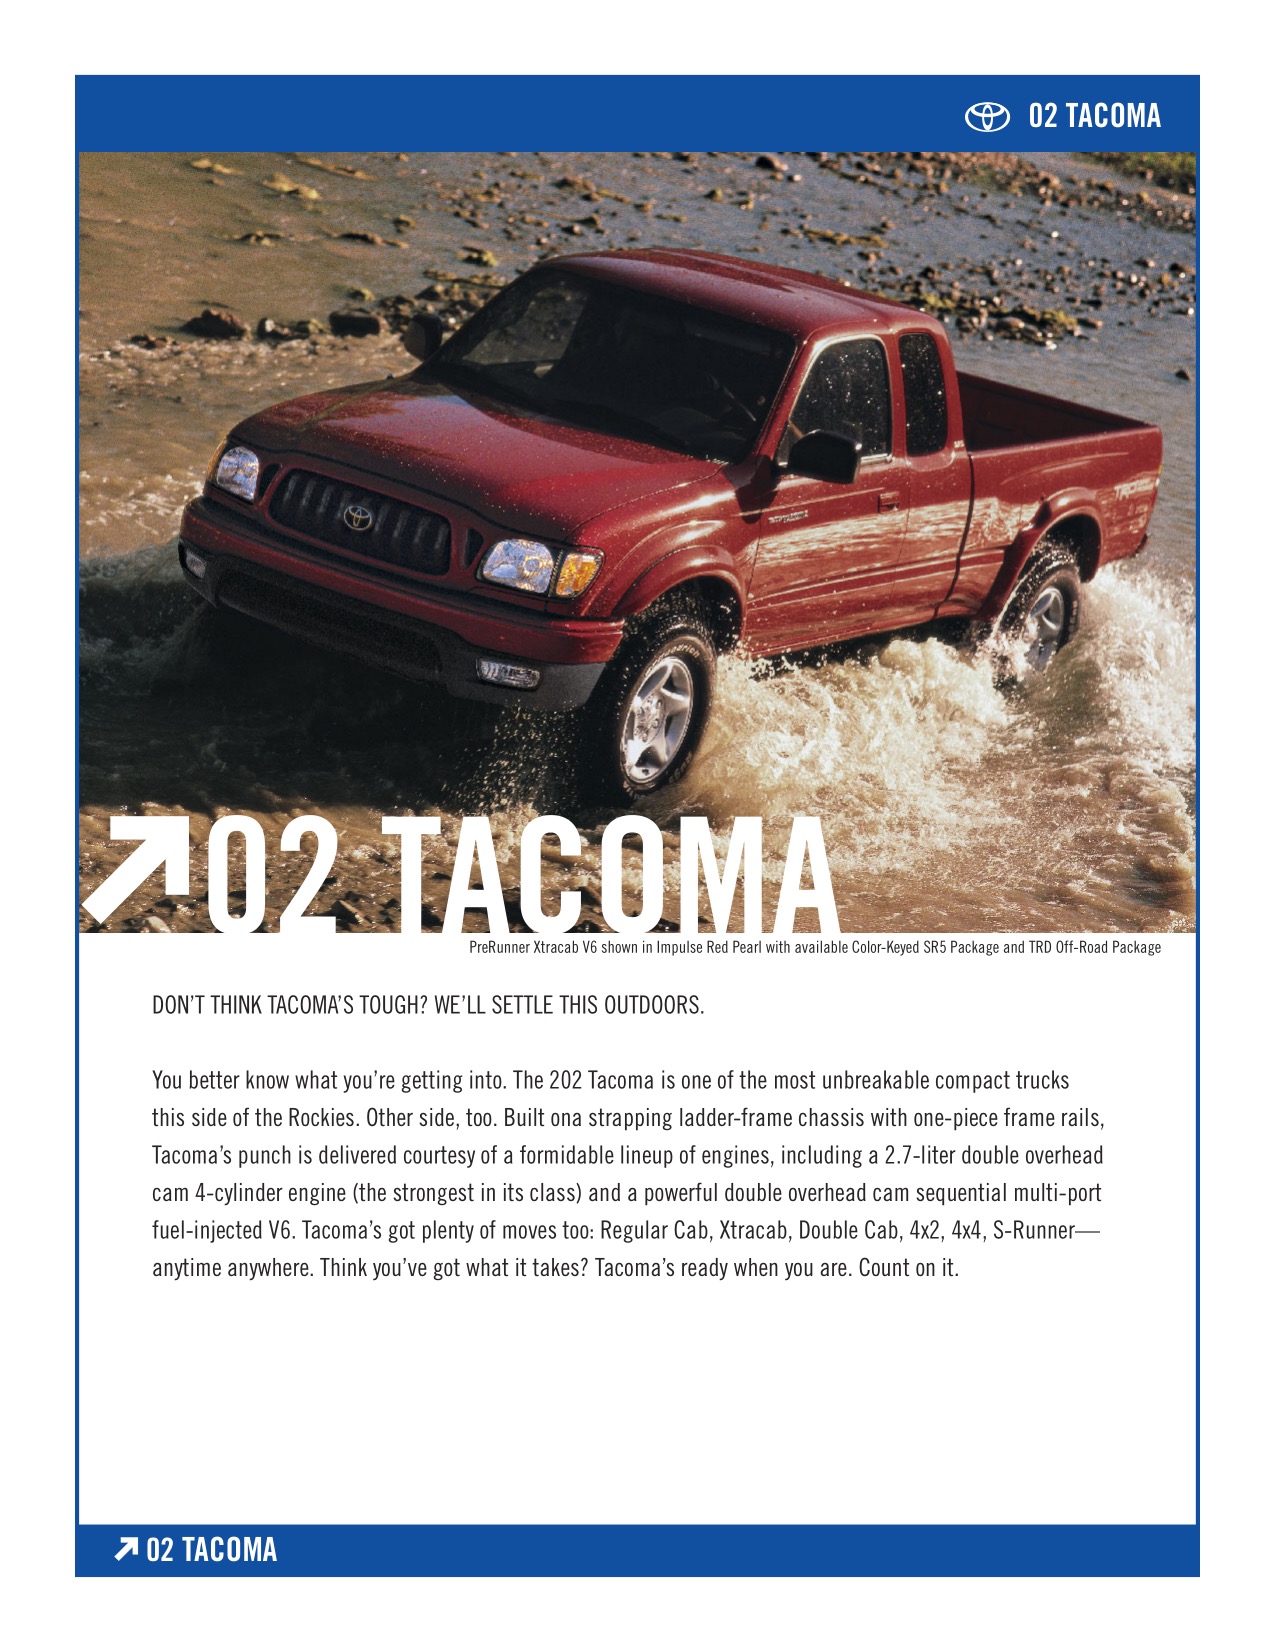 2002 Toyota Tacoma Brochure